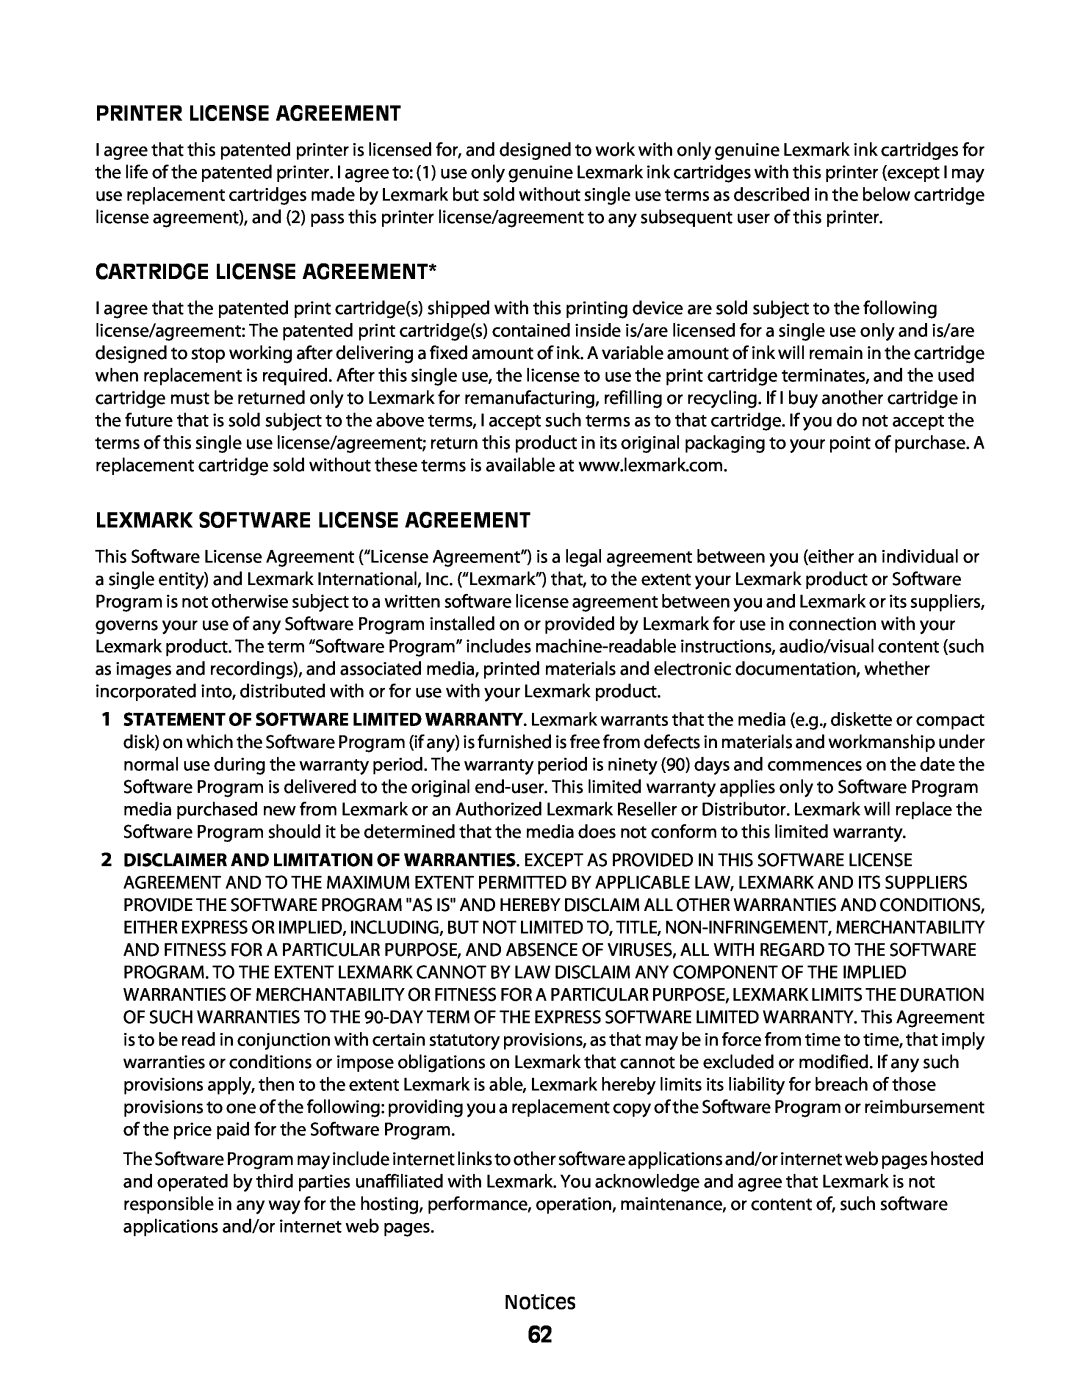 Lexmark 4433, 4445 manual Printer License Agreement, Cartridge License Agreement, Lexmark Software License Agreement 